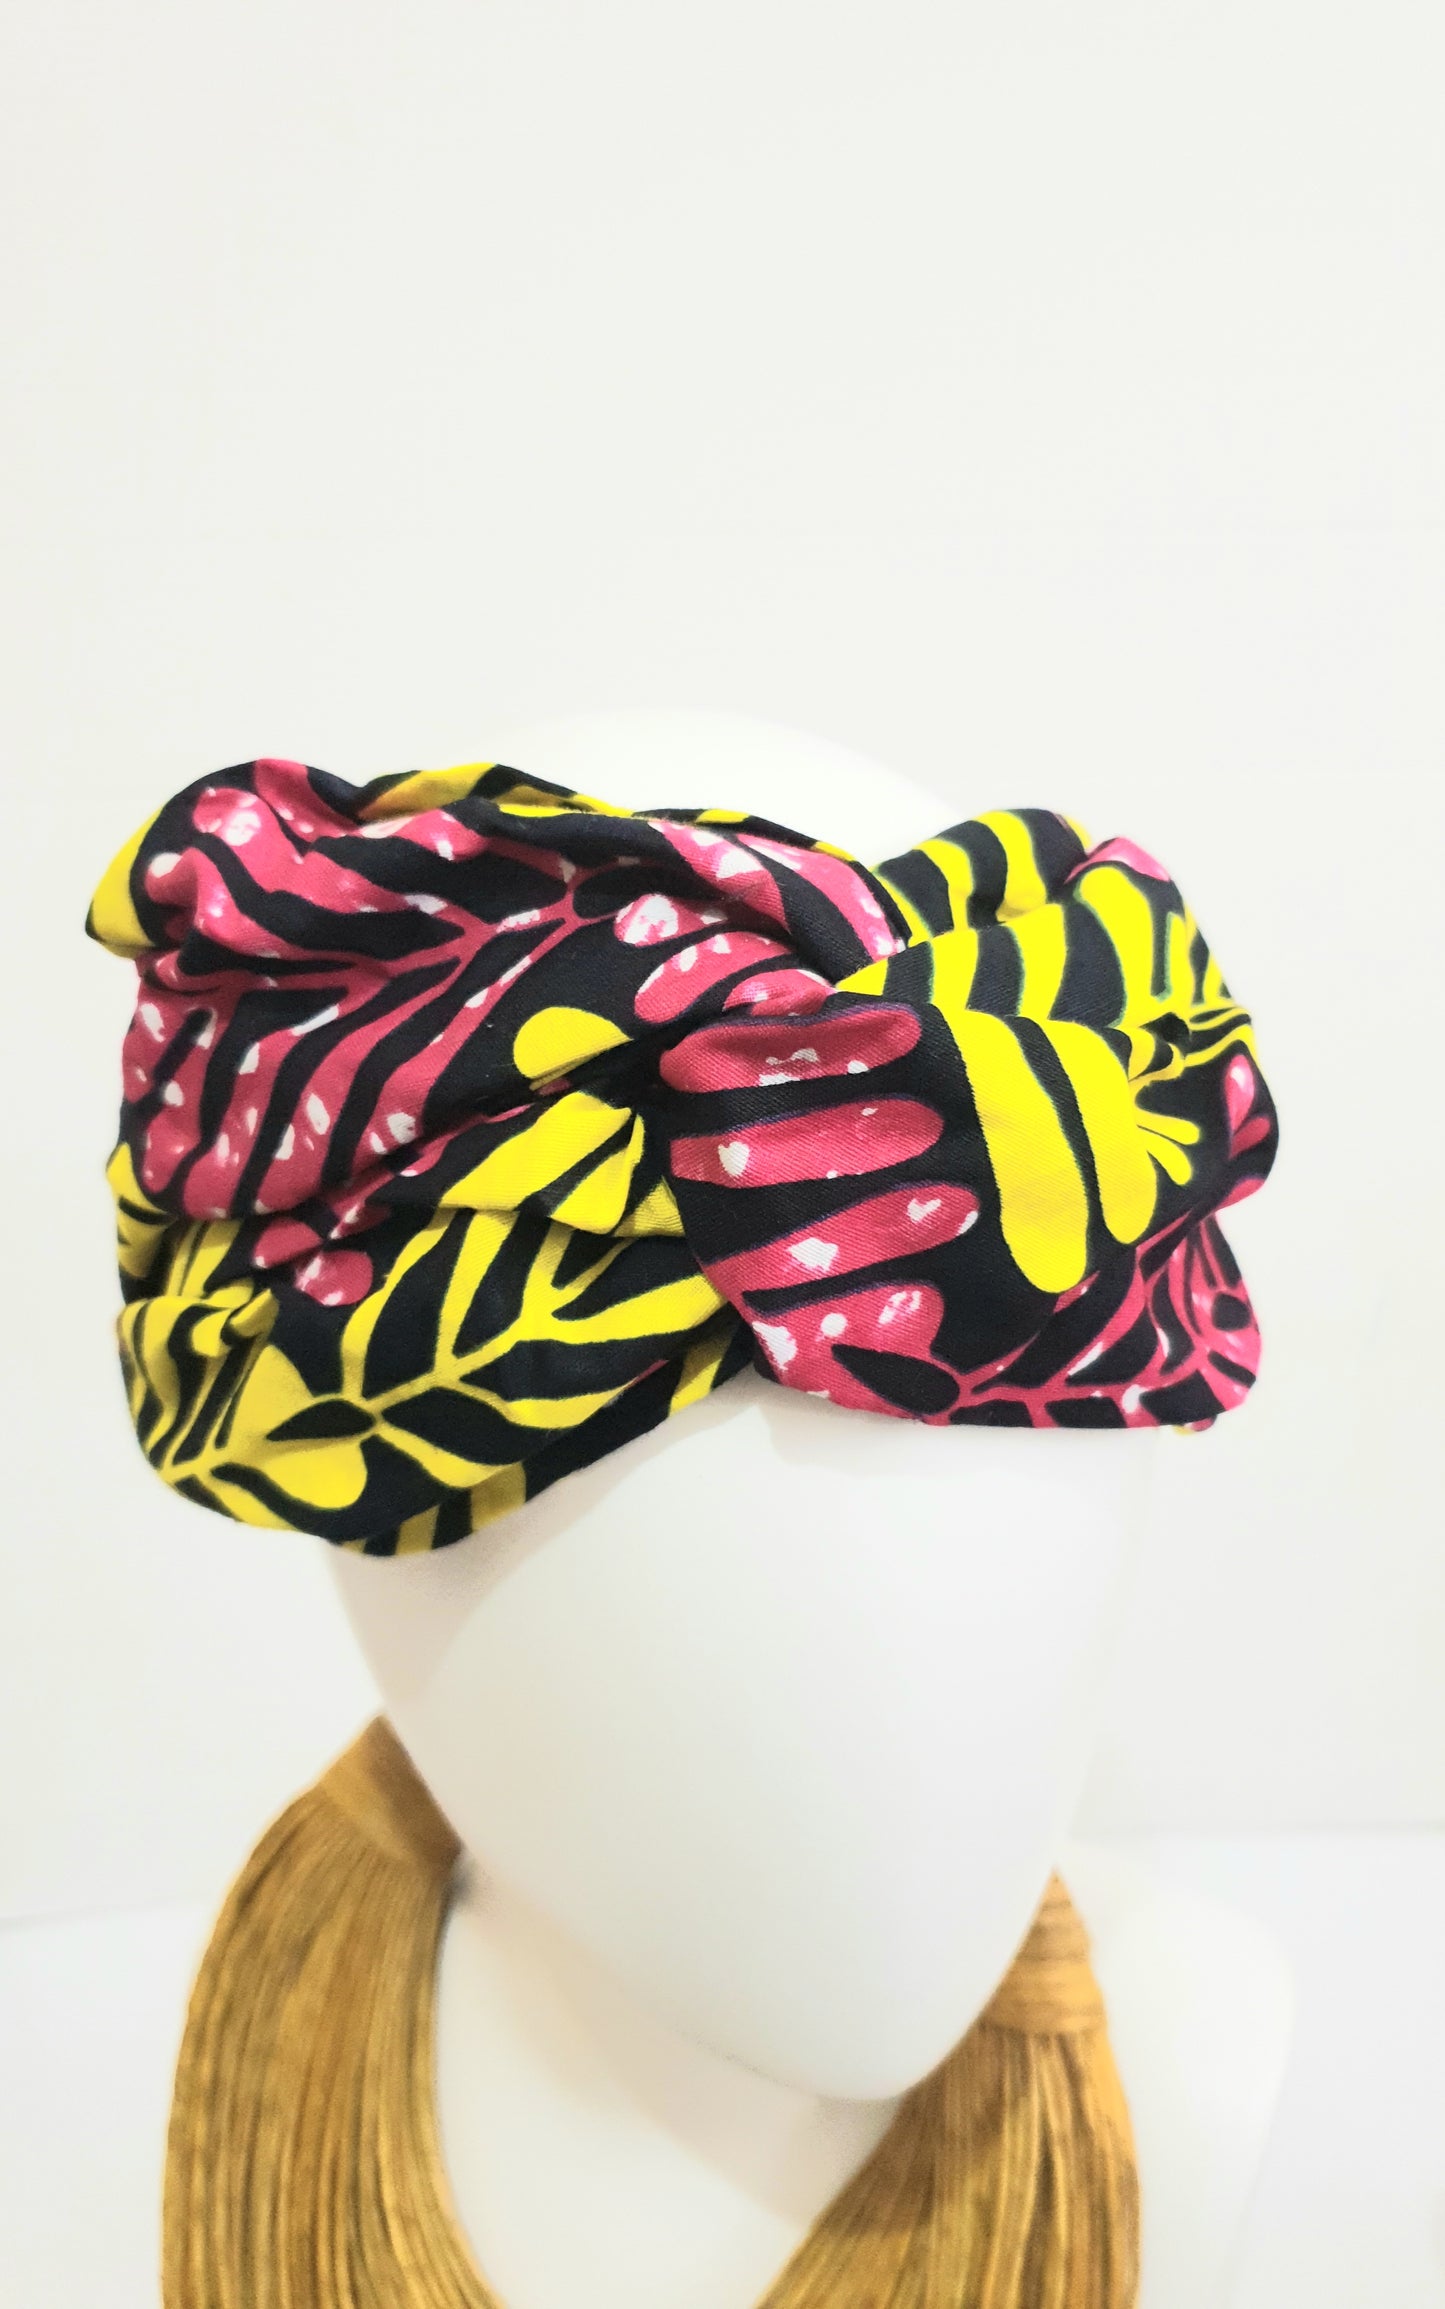 Pink and yellow African print turban style headband